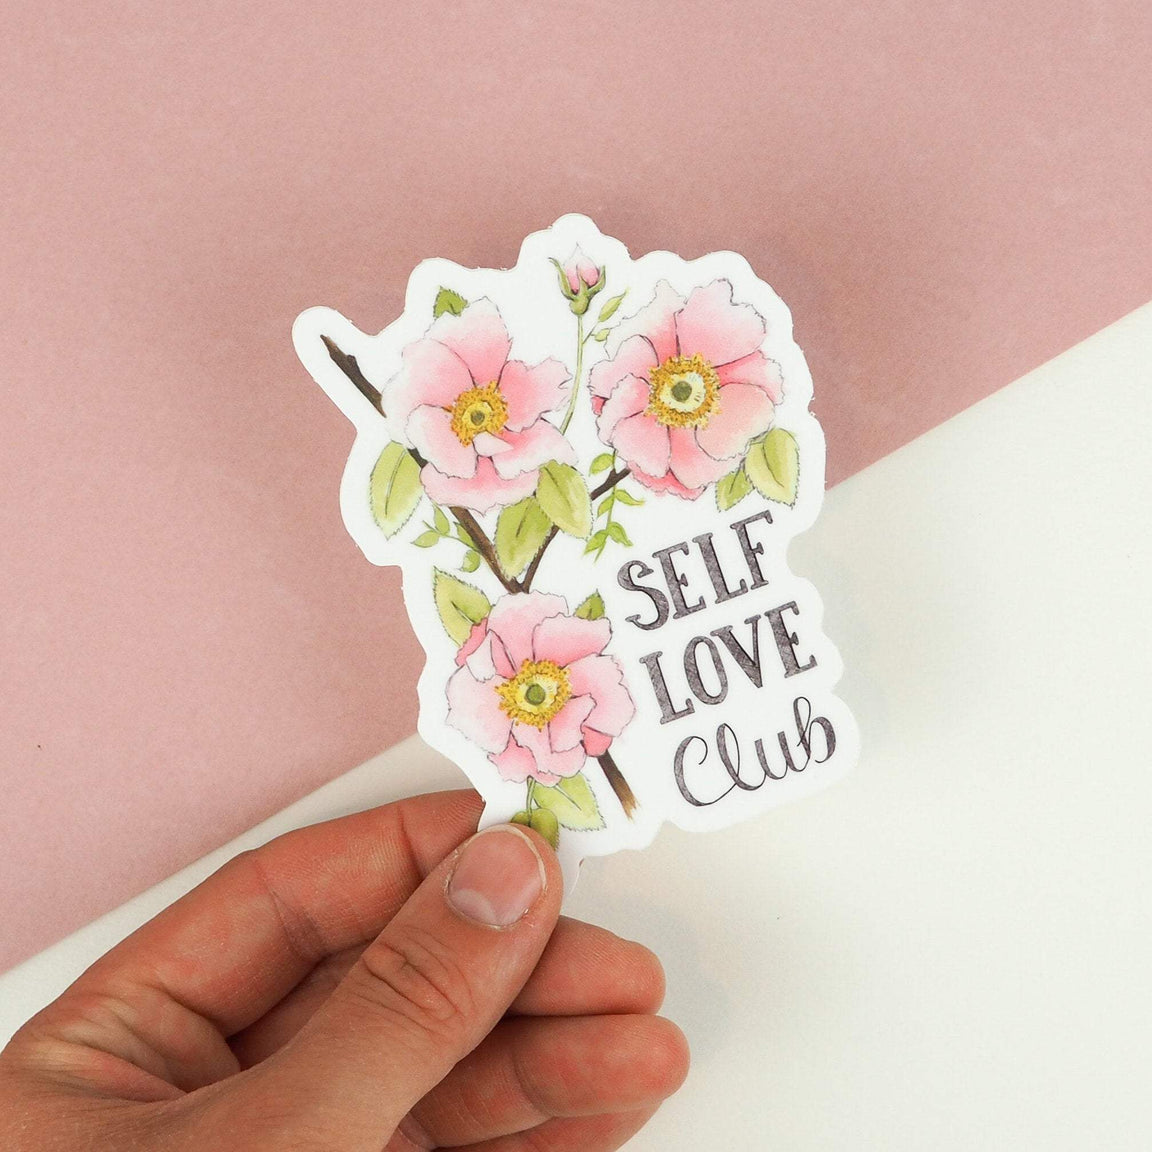 Self Love Club Sticker